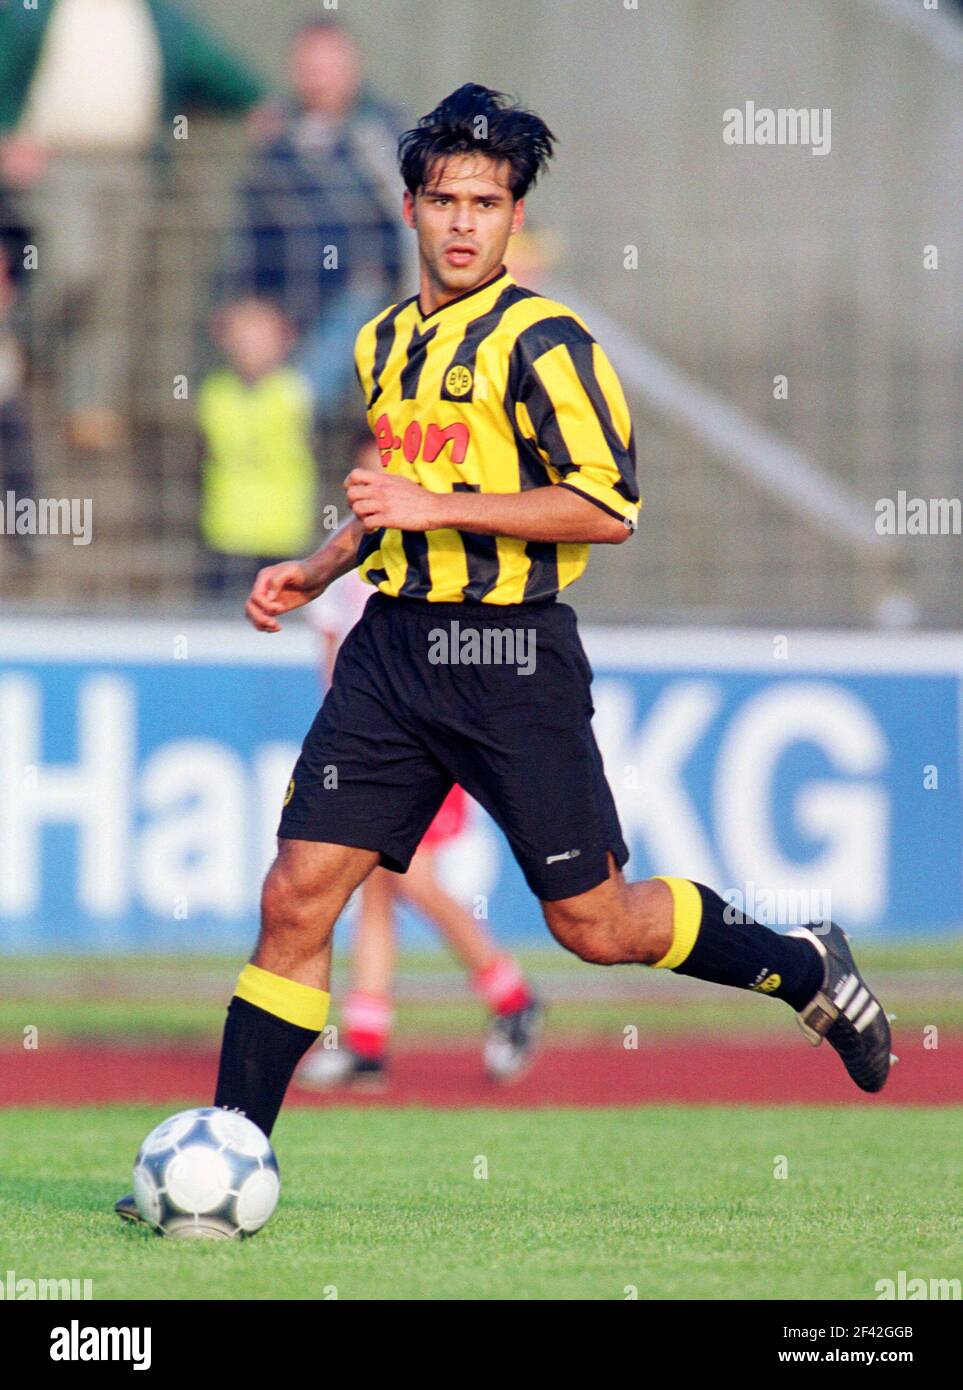 Dortmund, Germany 18.7.2000, Football: Bundesliga season 2000/01,  pre-season test match Borussia Dortmund (BVB, yellow) - Deniz SAHIN Stock  Photo - Alamy